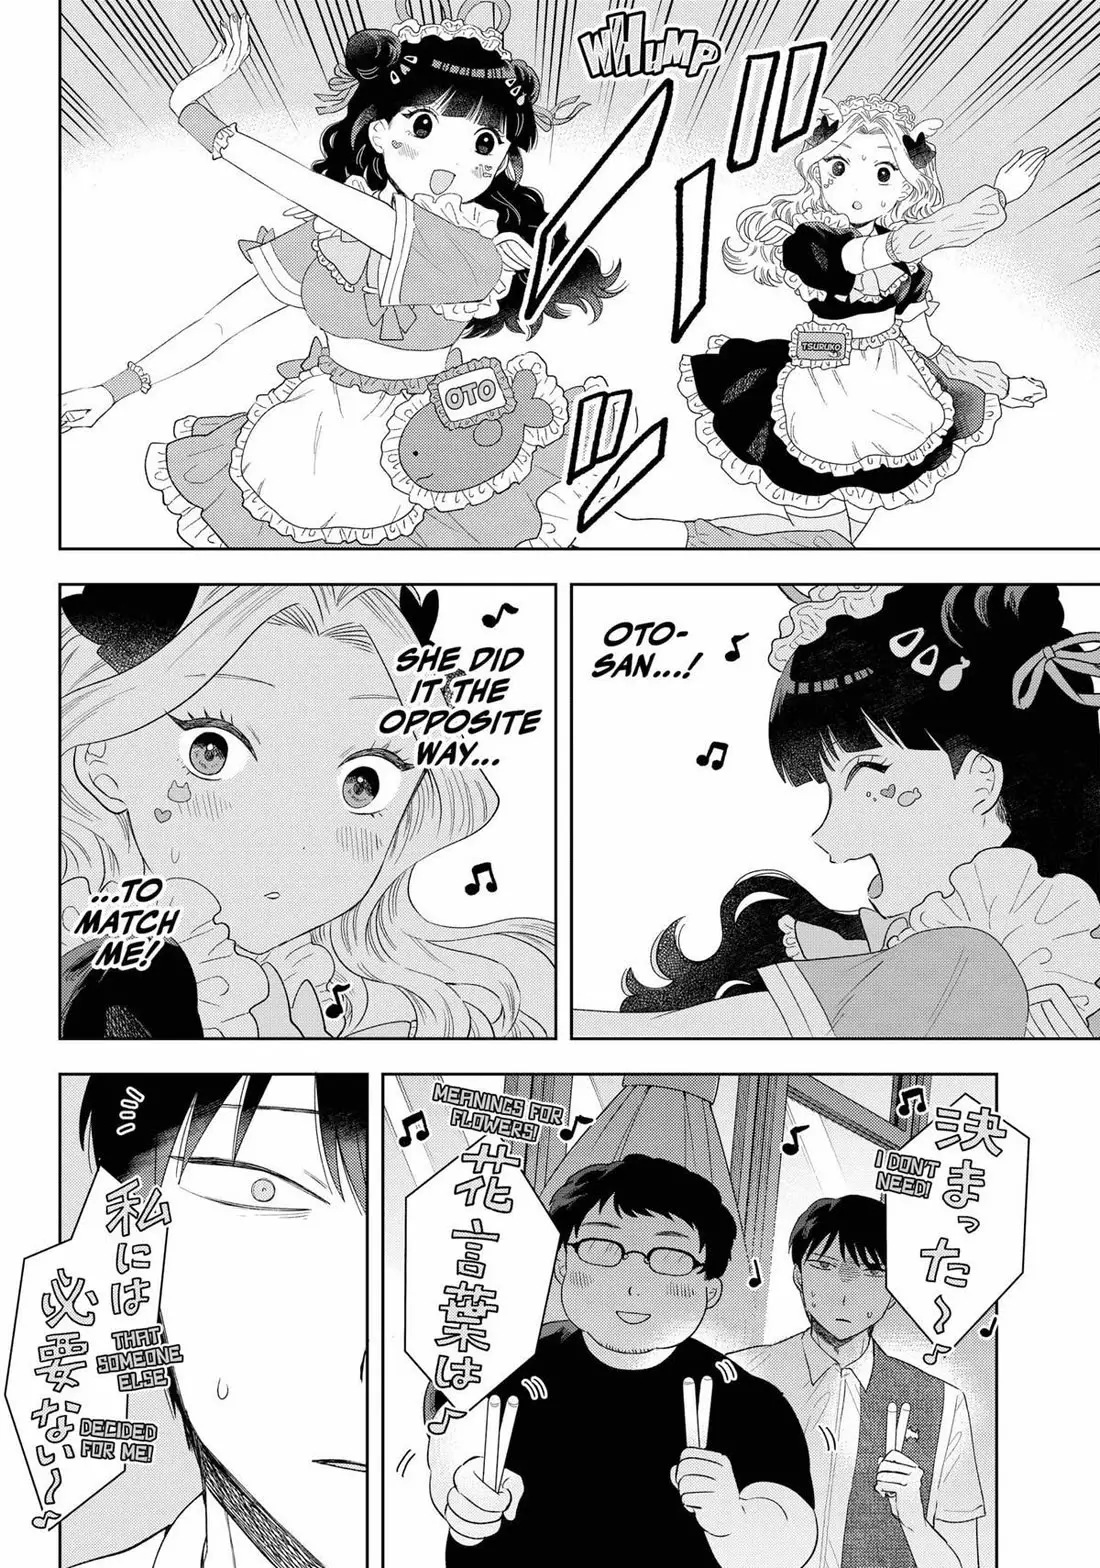 Tsuruko Returns The Favor - 18 page 18-2c42208b